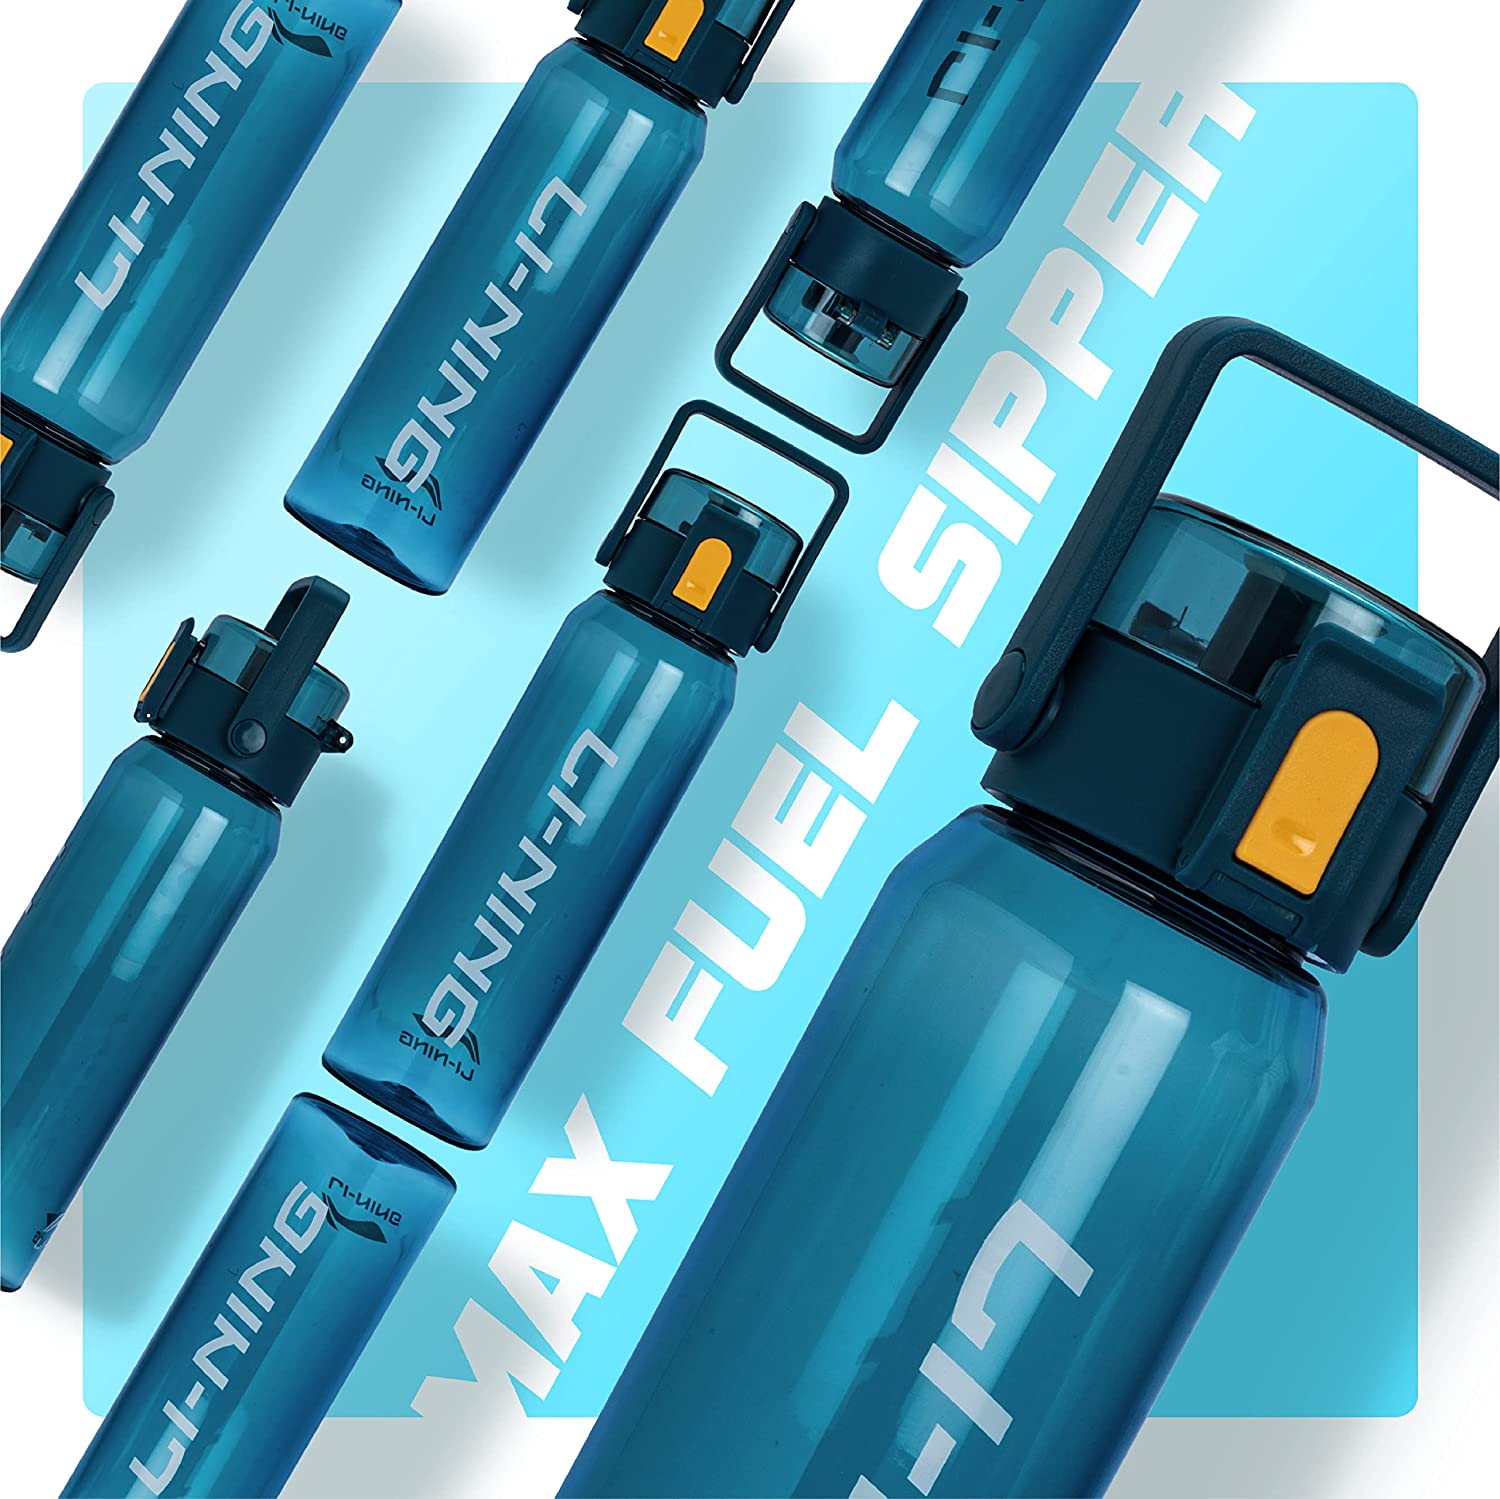 Li-Ning AQTR Tritan Water Bottle - 900ml , Blue - Best Price online Prokicksports.com